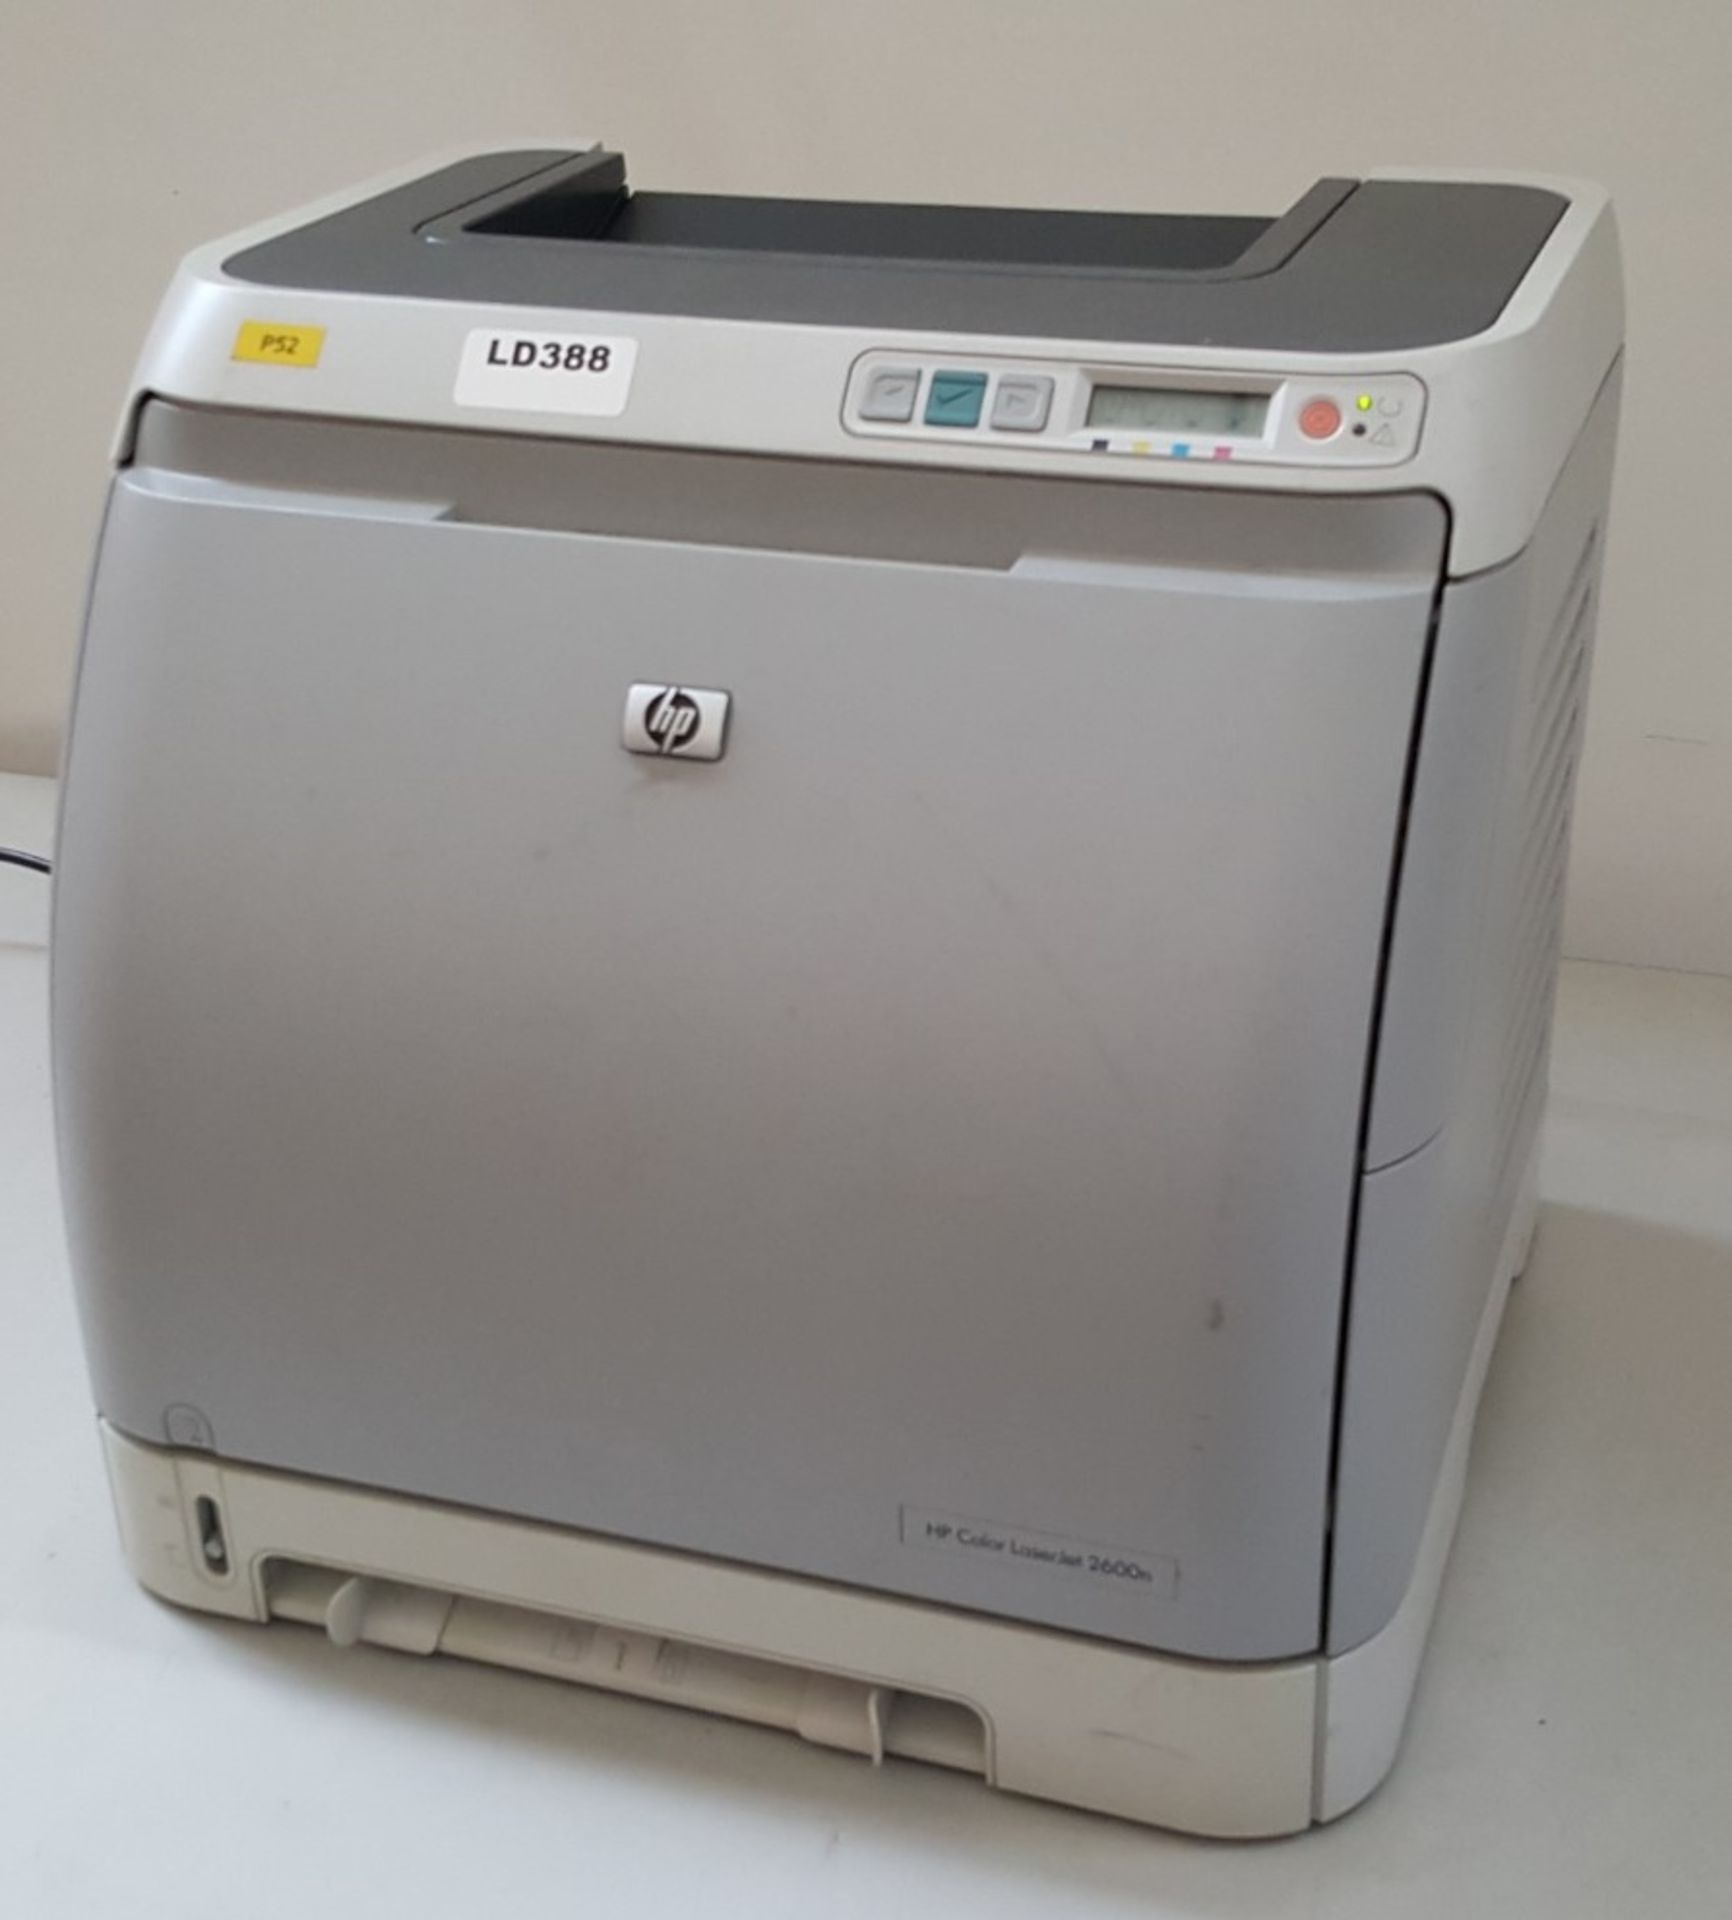 1 x HP Laserjet 2600N Printer Q6455A - Ref LD388 - Image 4 of 6